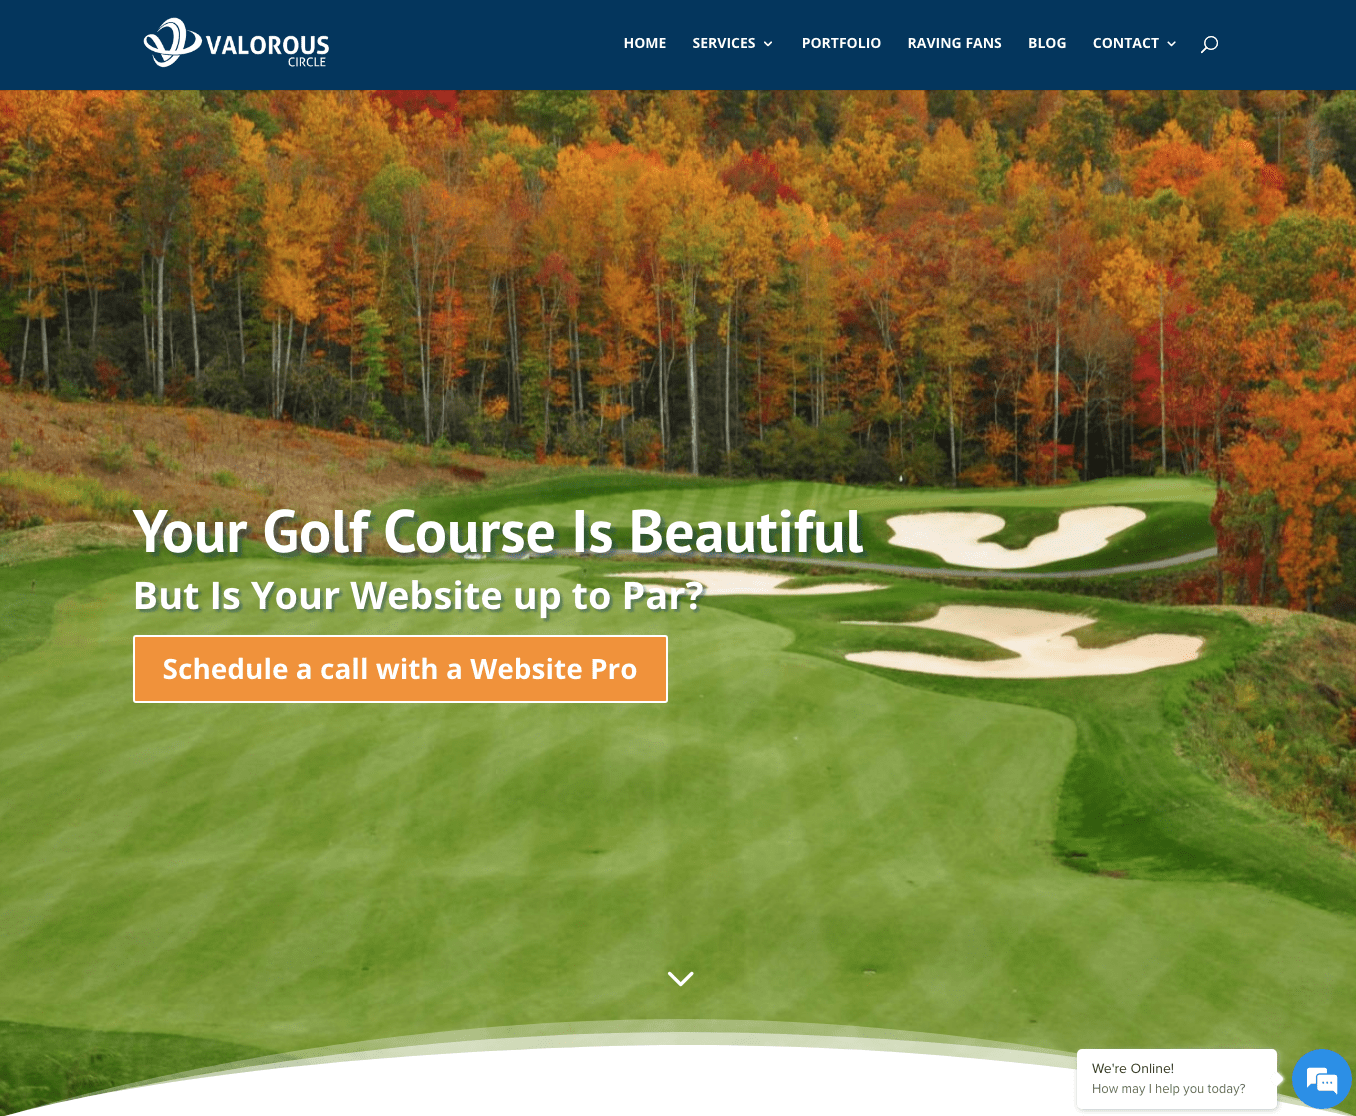 Valorous Circle's golf landing page. Create a landing page using subject matter cues.